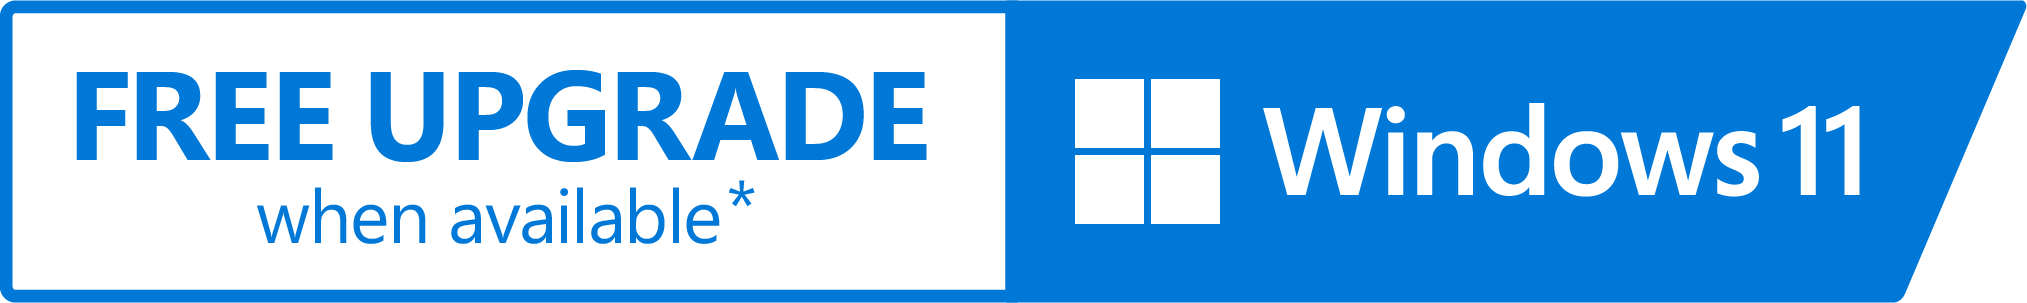 Serie Microsoft Banner